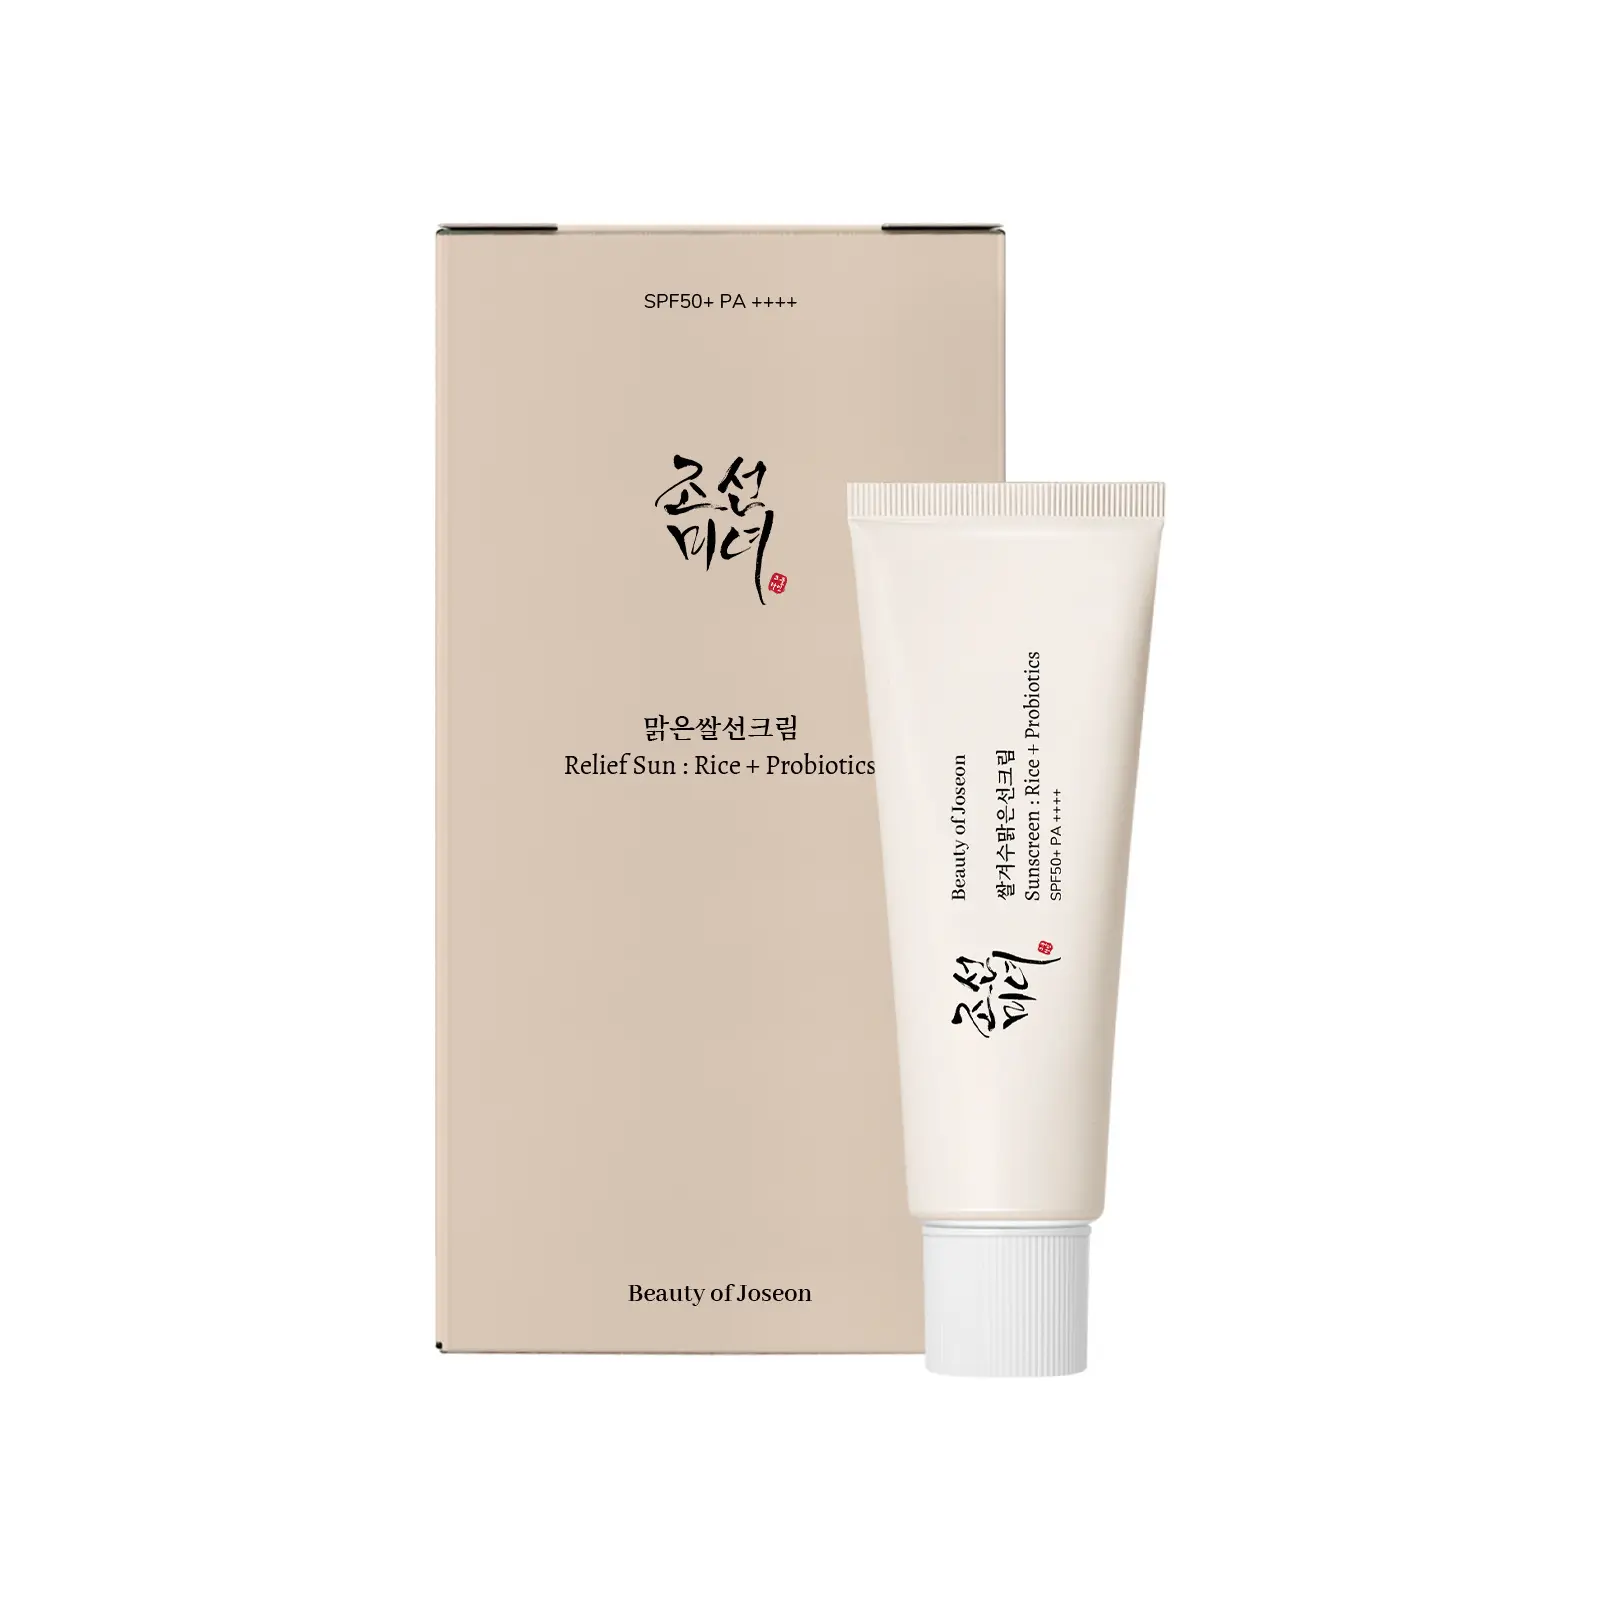 Sunscreen spf50+ natural extract Sun Protection Moisturizing Korean Vegan Beauty of Joseon sunscreen packaging